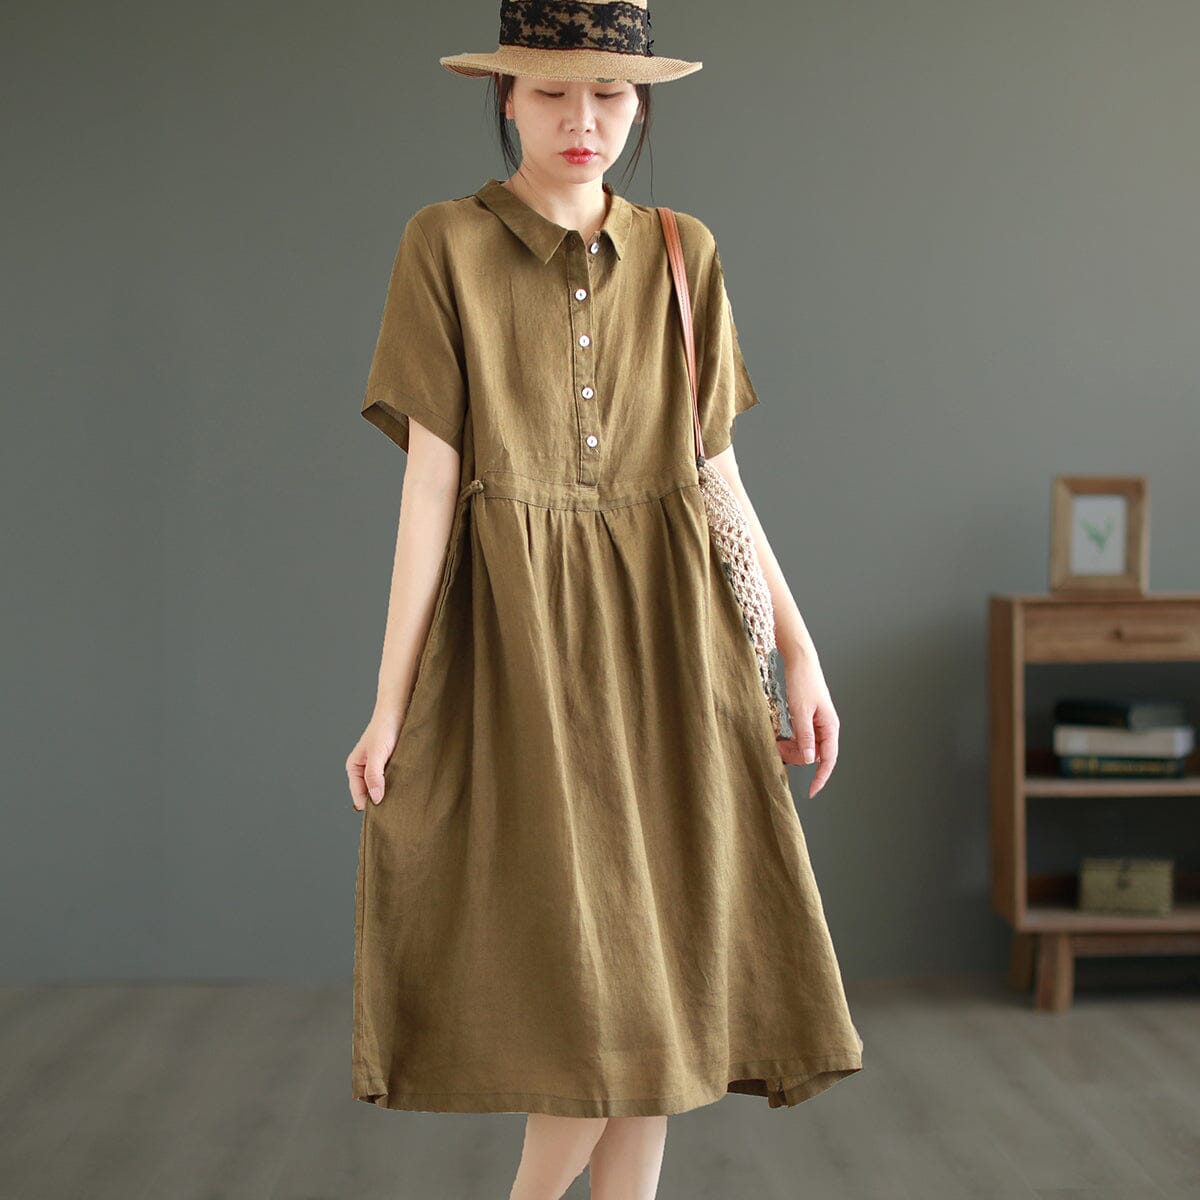 Summer Retro Casual Solid Linen A-Line Dress